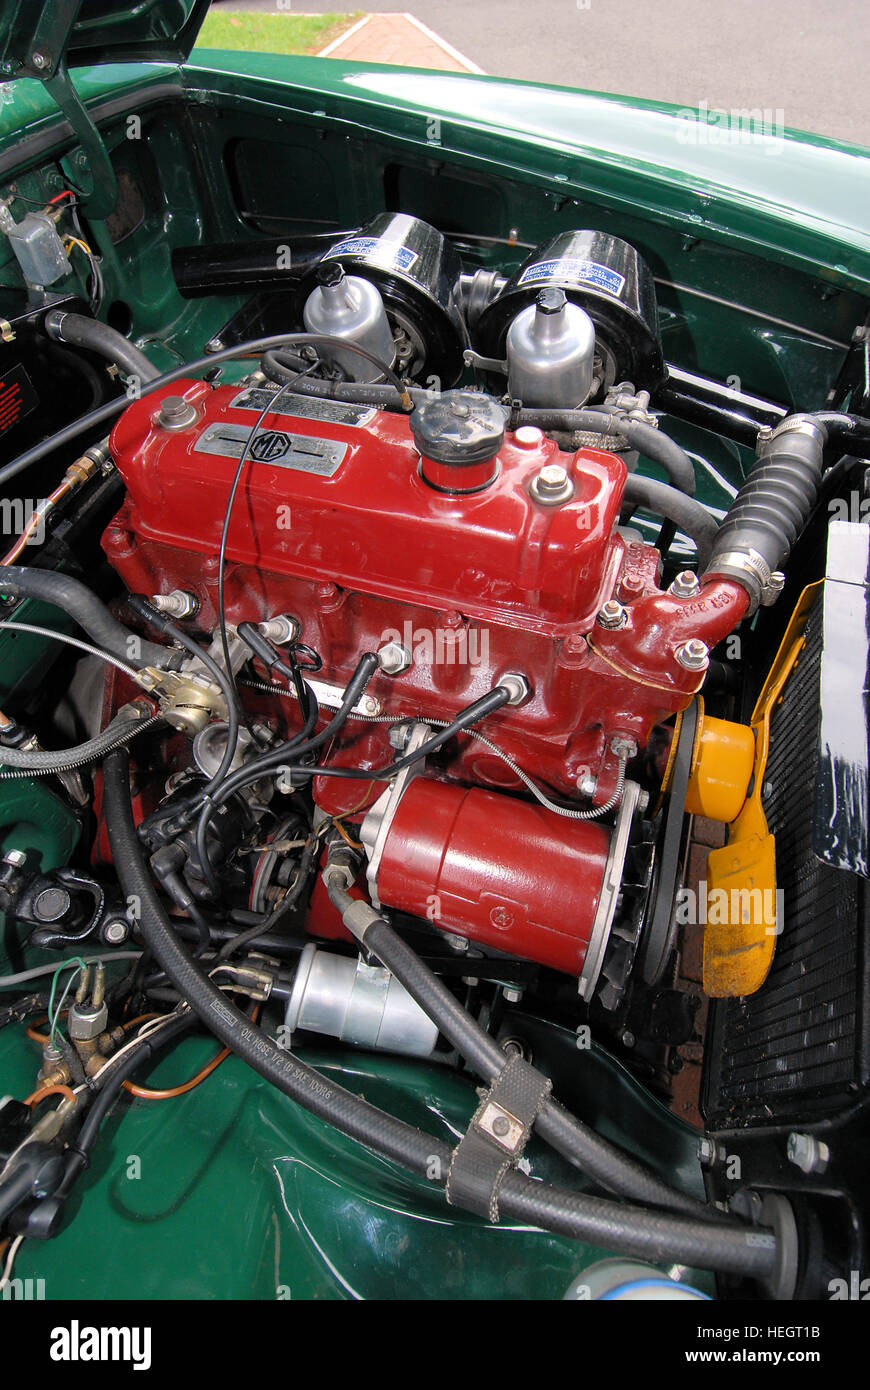 MG MGB convertible classic sports car engine Stock Photo - Alamy